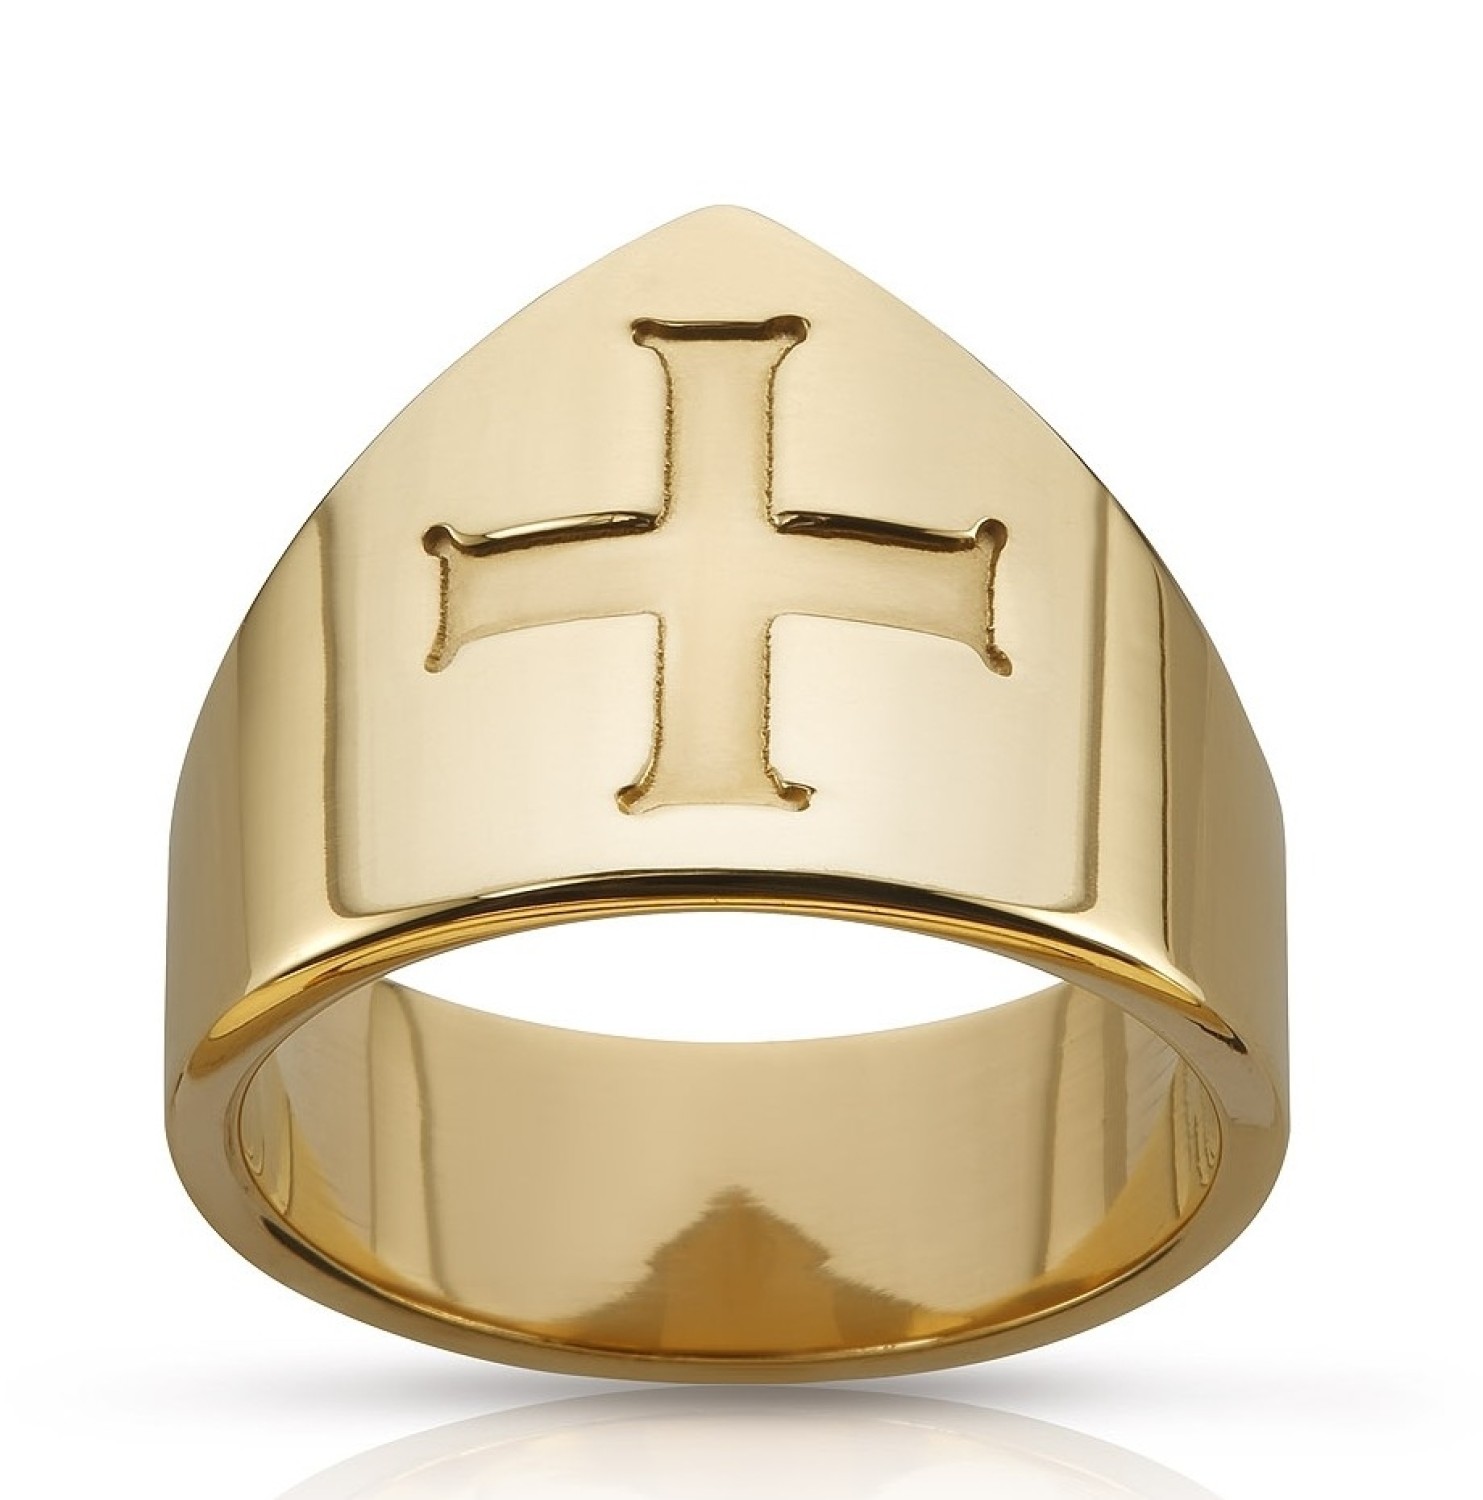 Bishop's Ring For Sale | peacecommission.kdsg.gov.ng